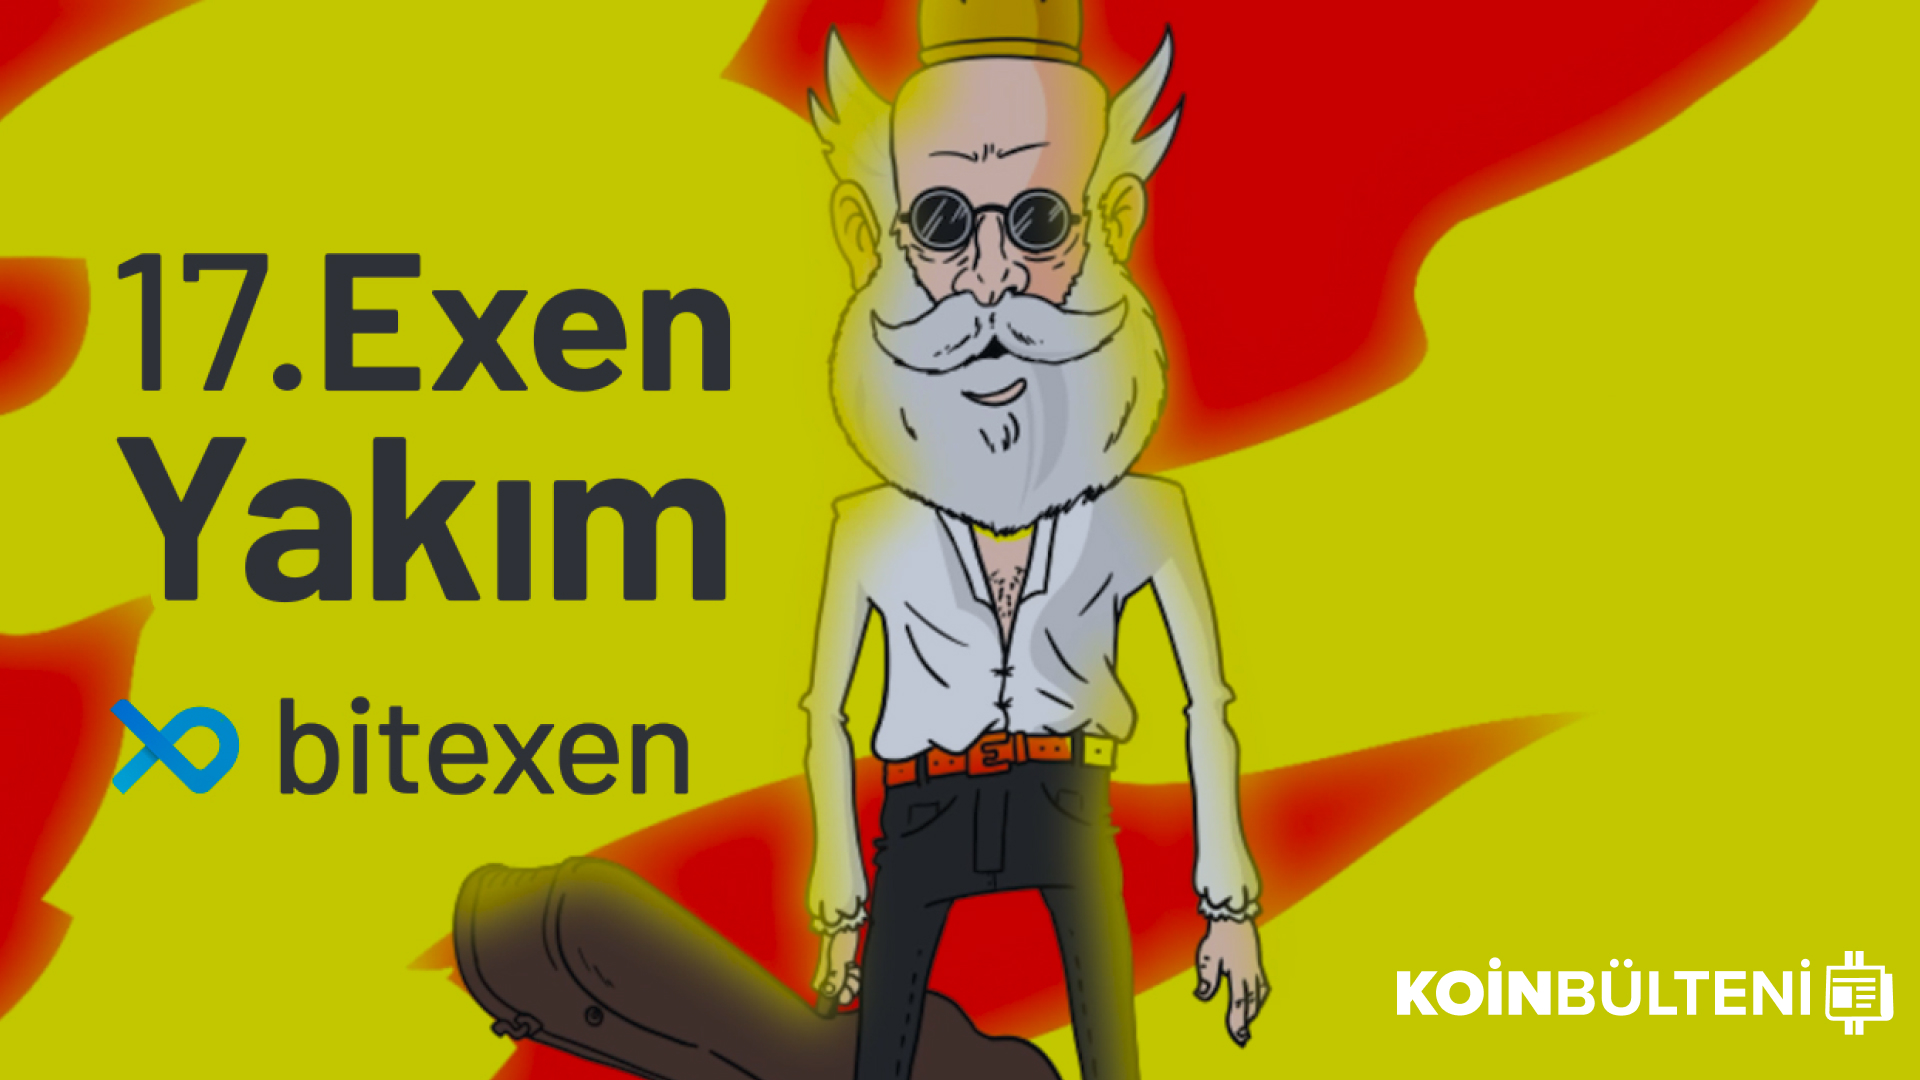 bitexen-exen-coin-kripto-para-coin-dijital-varlik-fiyat-turk-lirasi-yatirim